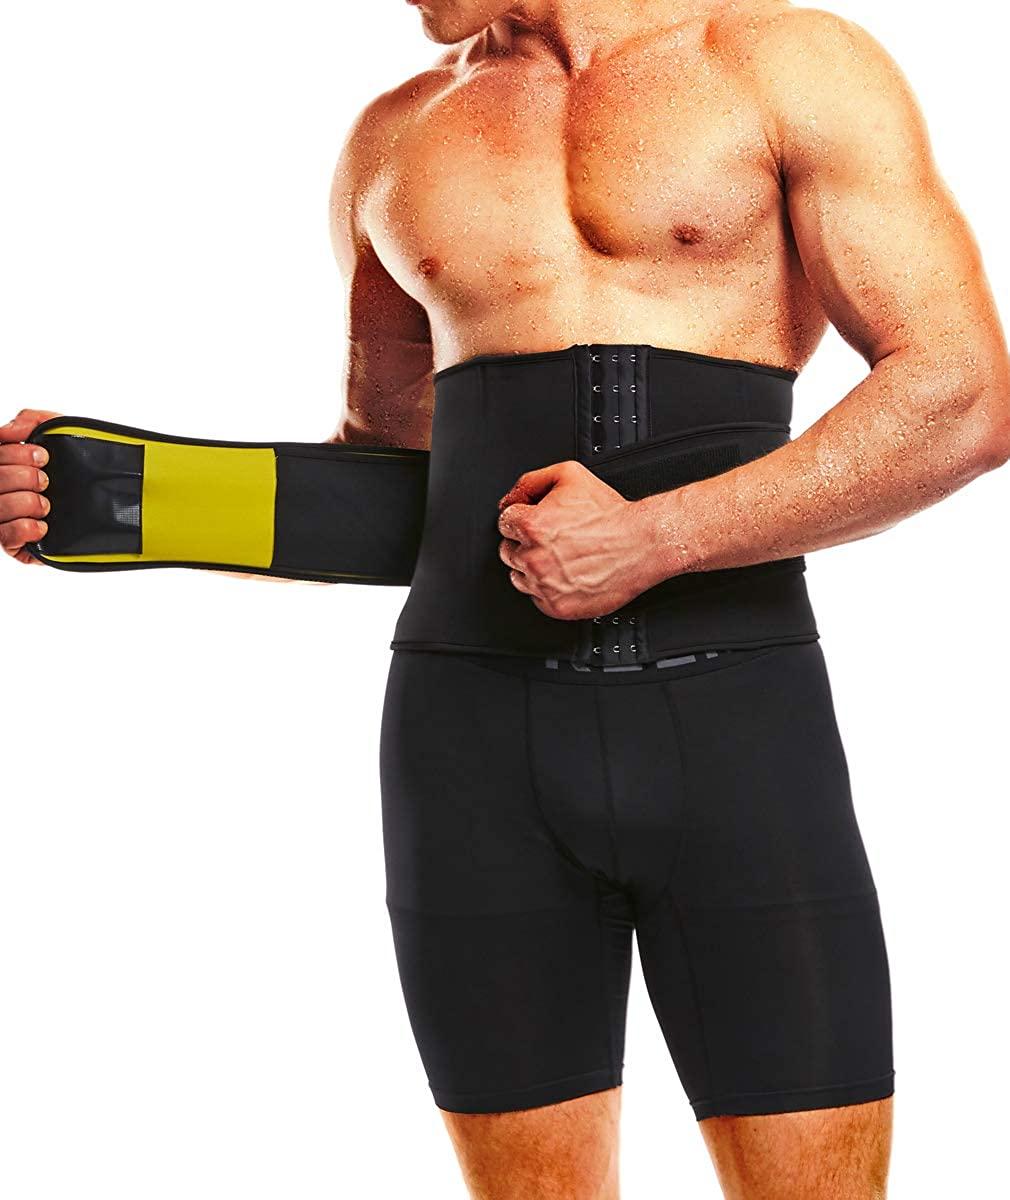 GetUSCart- TAILONG Neoprene Waist Trimmer Ab Belt for Men Waist Trainer  Corset Slimming Body Shaper Workout Sauna Hot Sweat Band (Black with Band,  XX-Large)